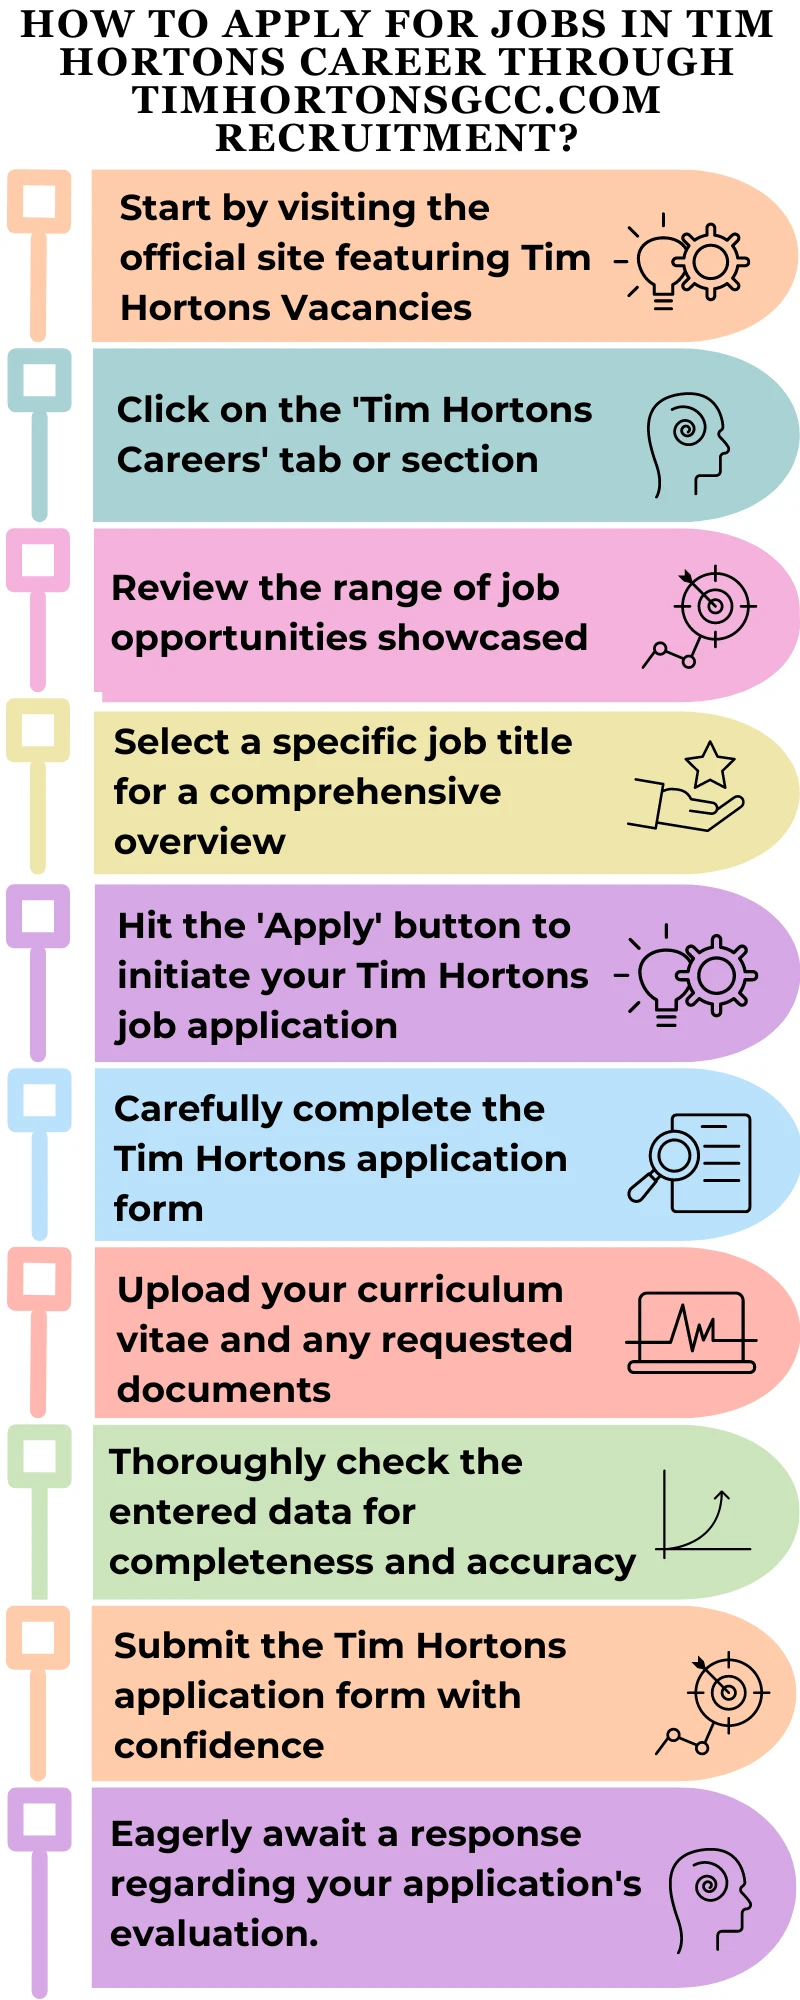 How to Apply for Jobs in Tim Hortons Career through timhortonsgcc.com recruitment?